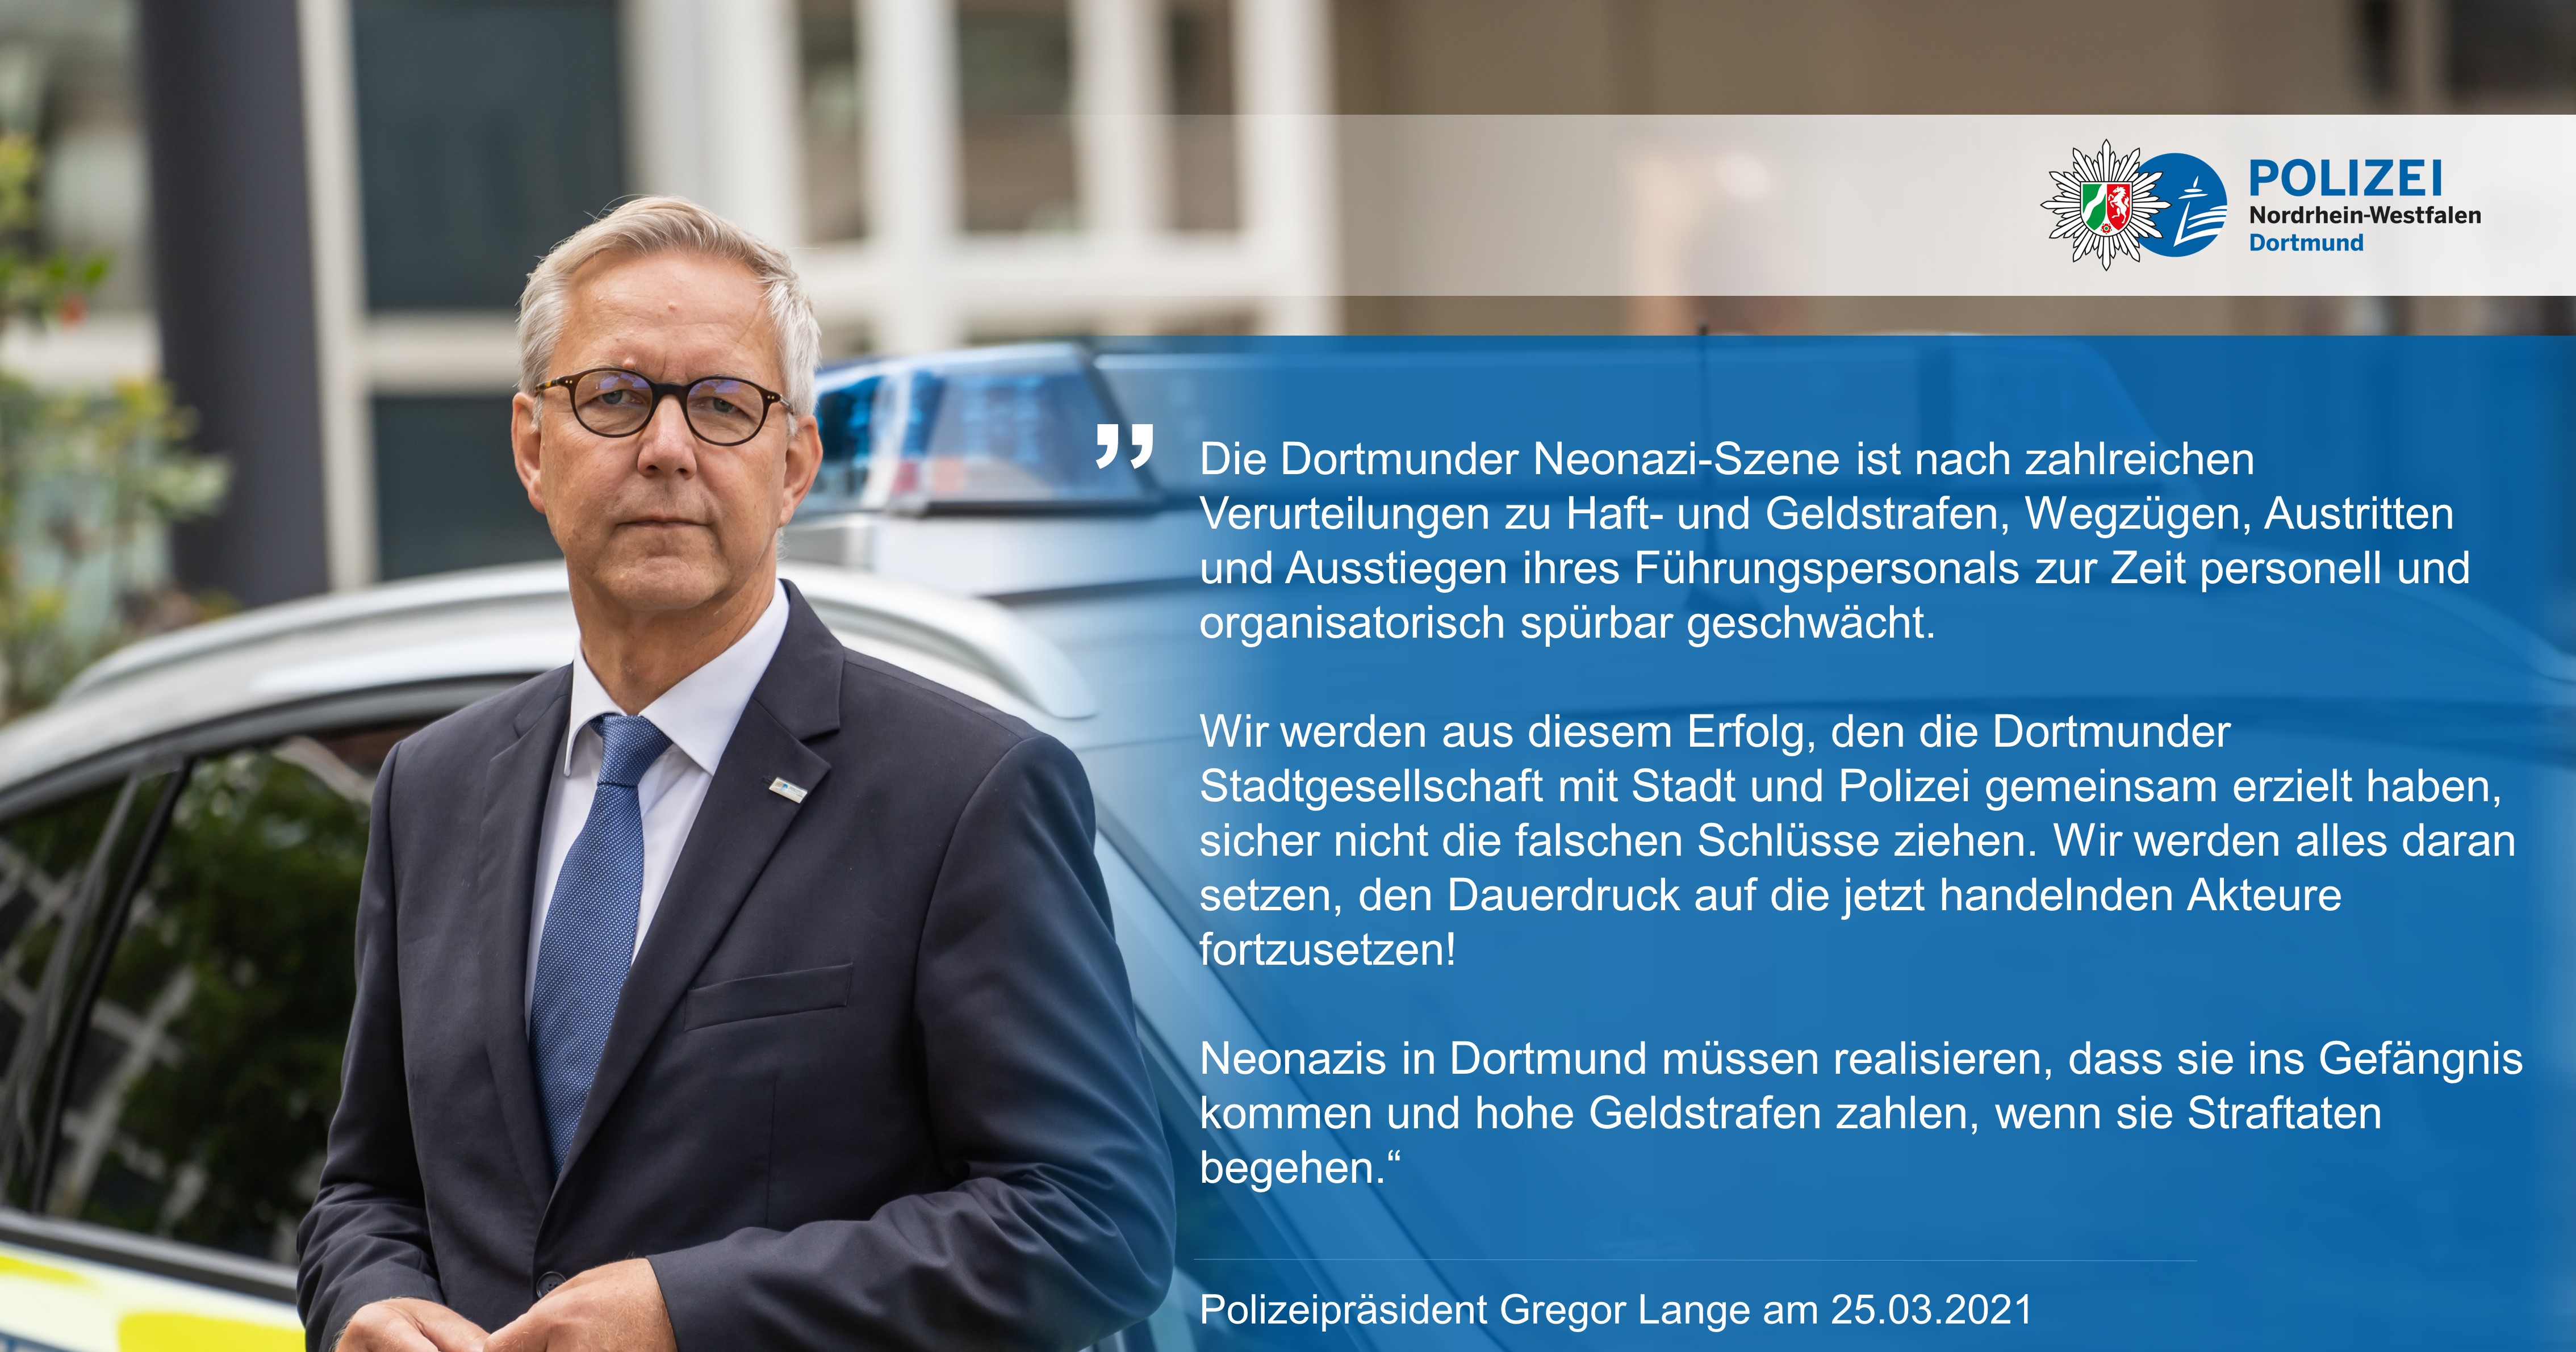 Polizeipräsident Gregor Lange zur Dortmunder Neonazi-Szene